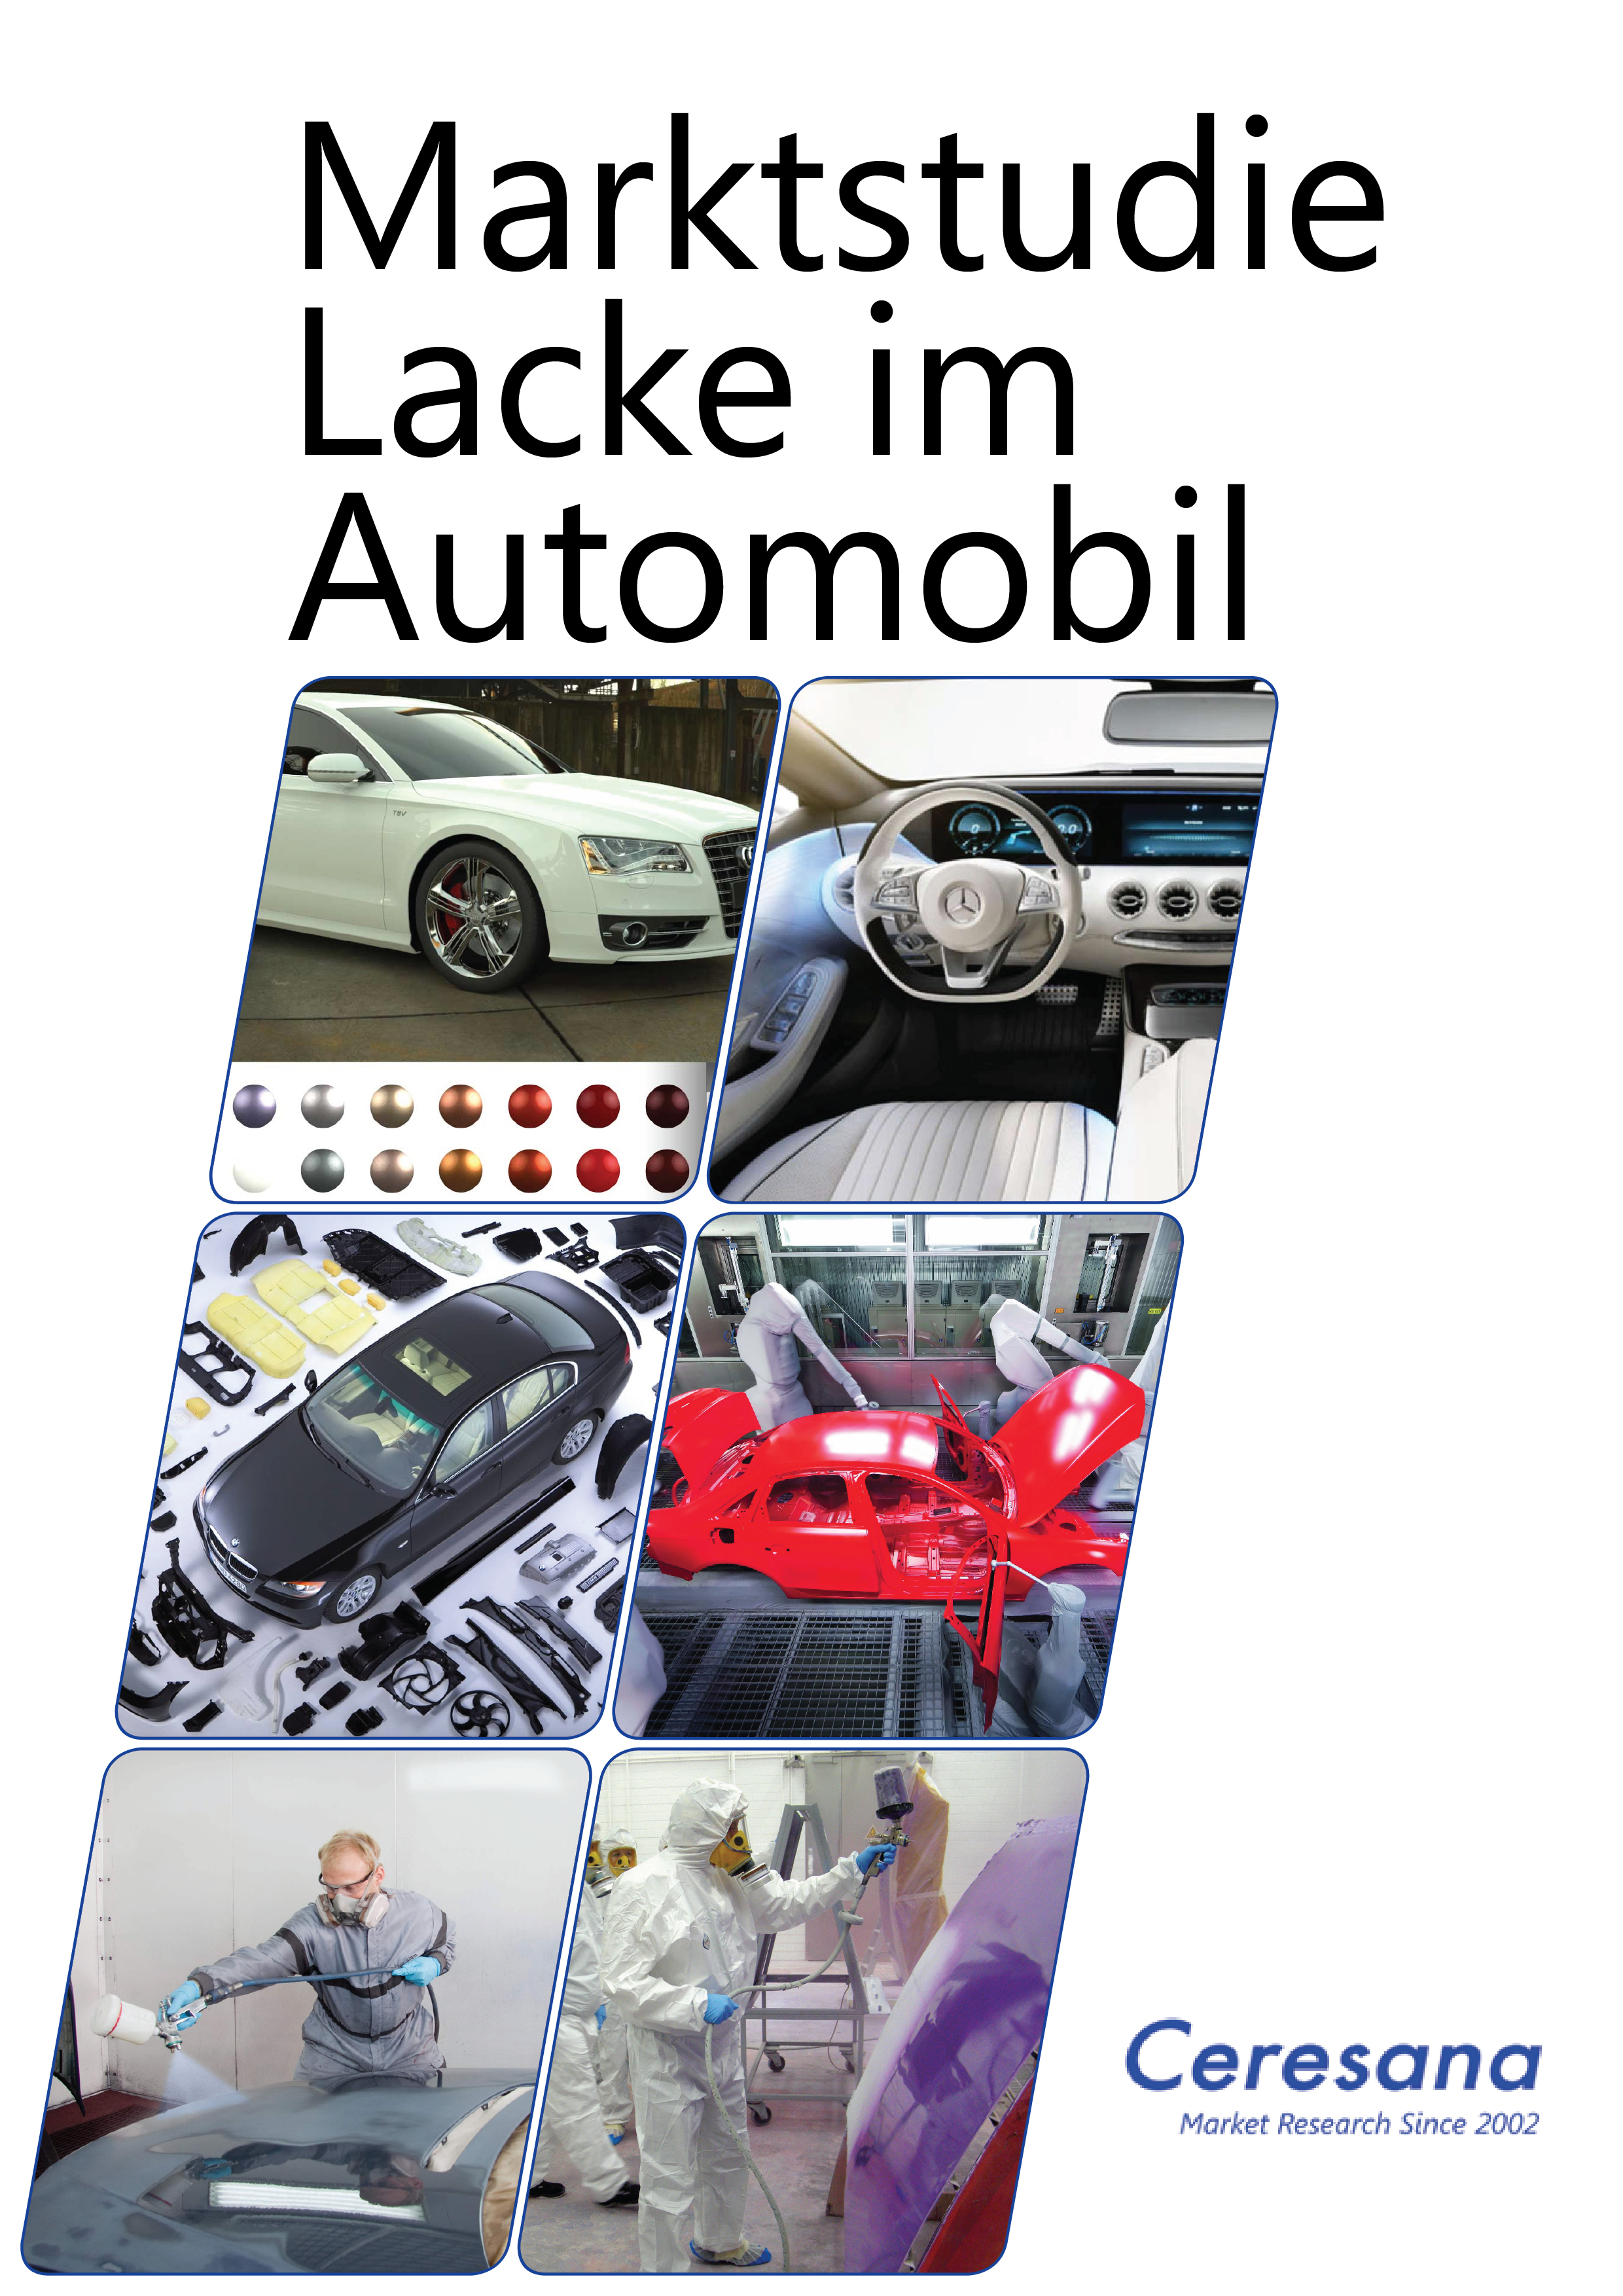 Deutschland-24/7.de - Deutschland Infos & Deutschland Tipps | Marktstudie Lacke im Automobil